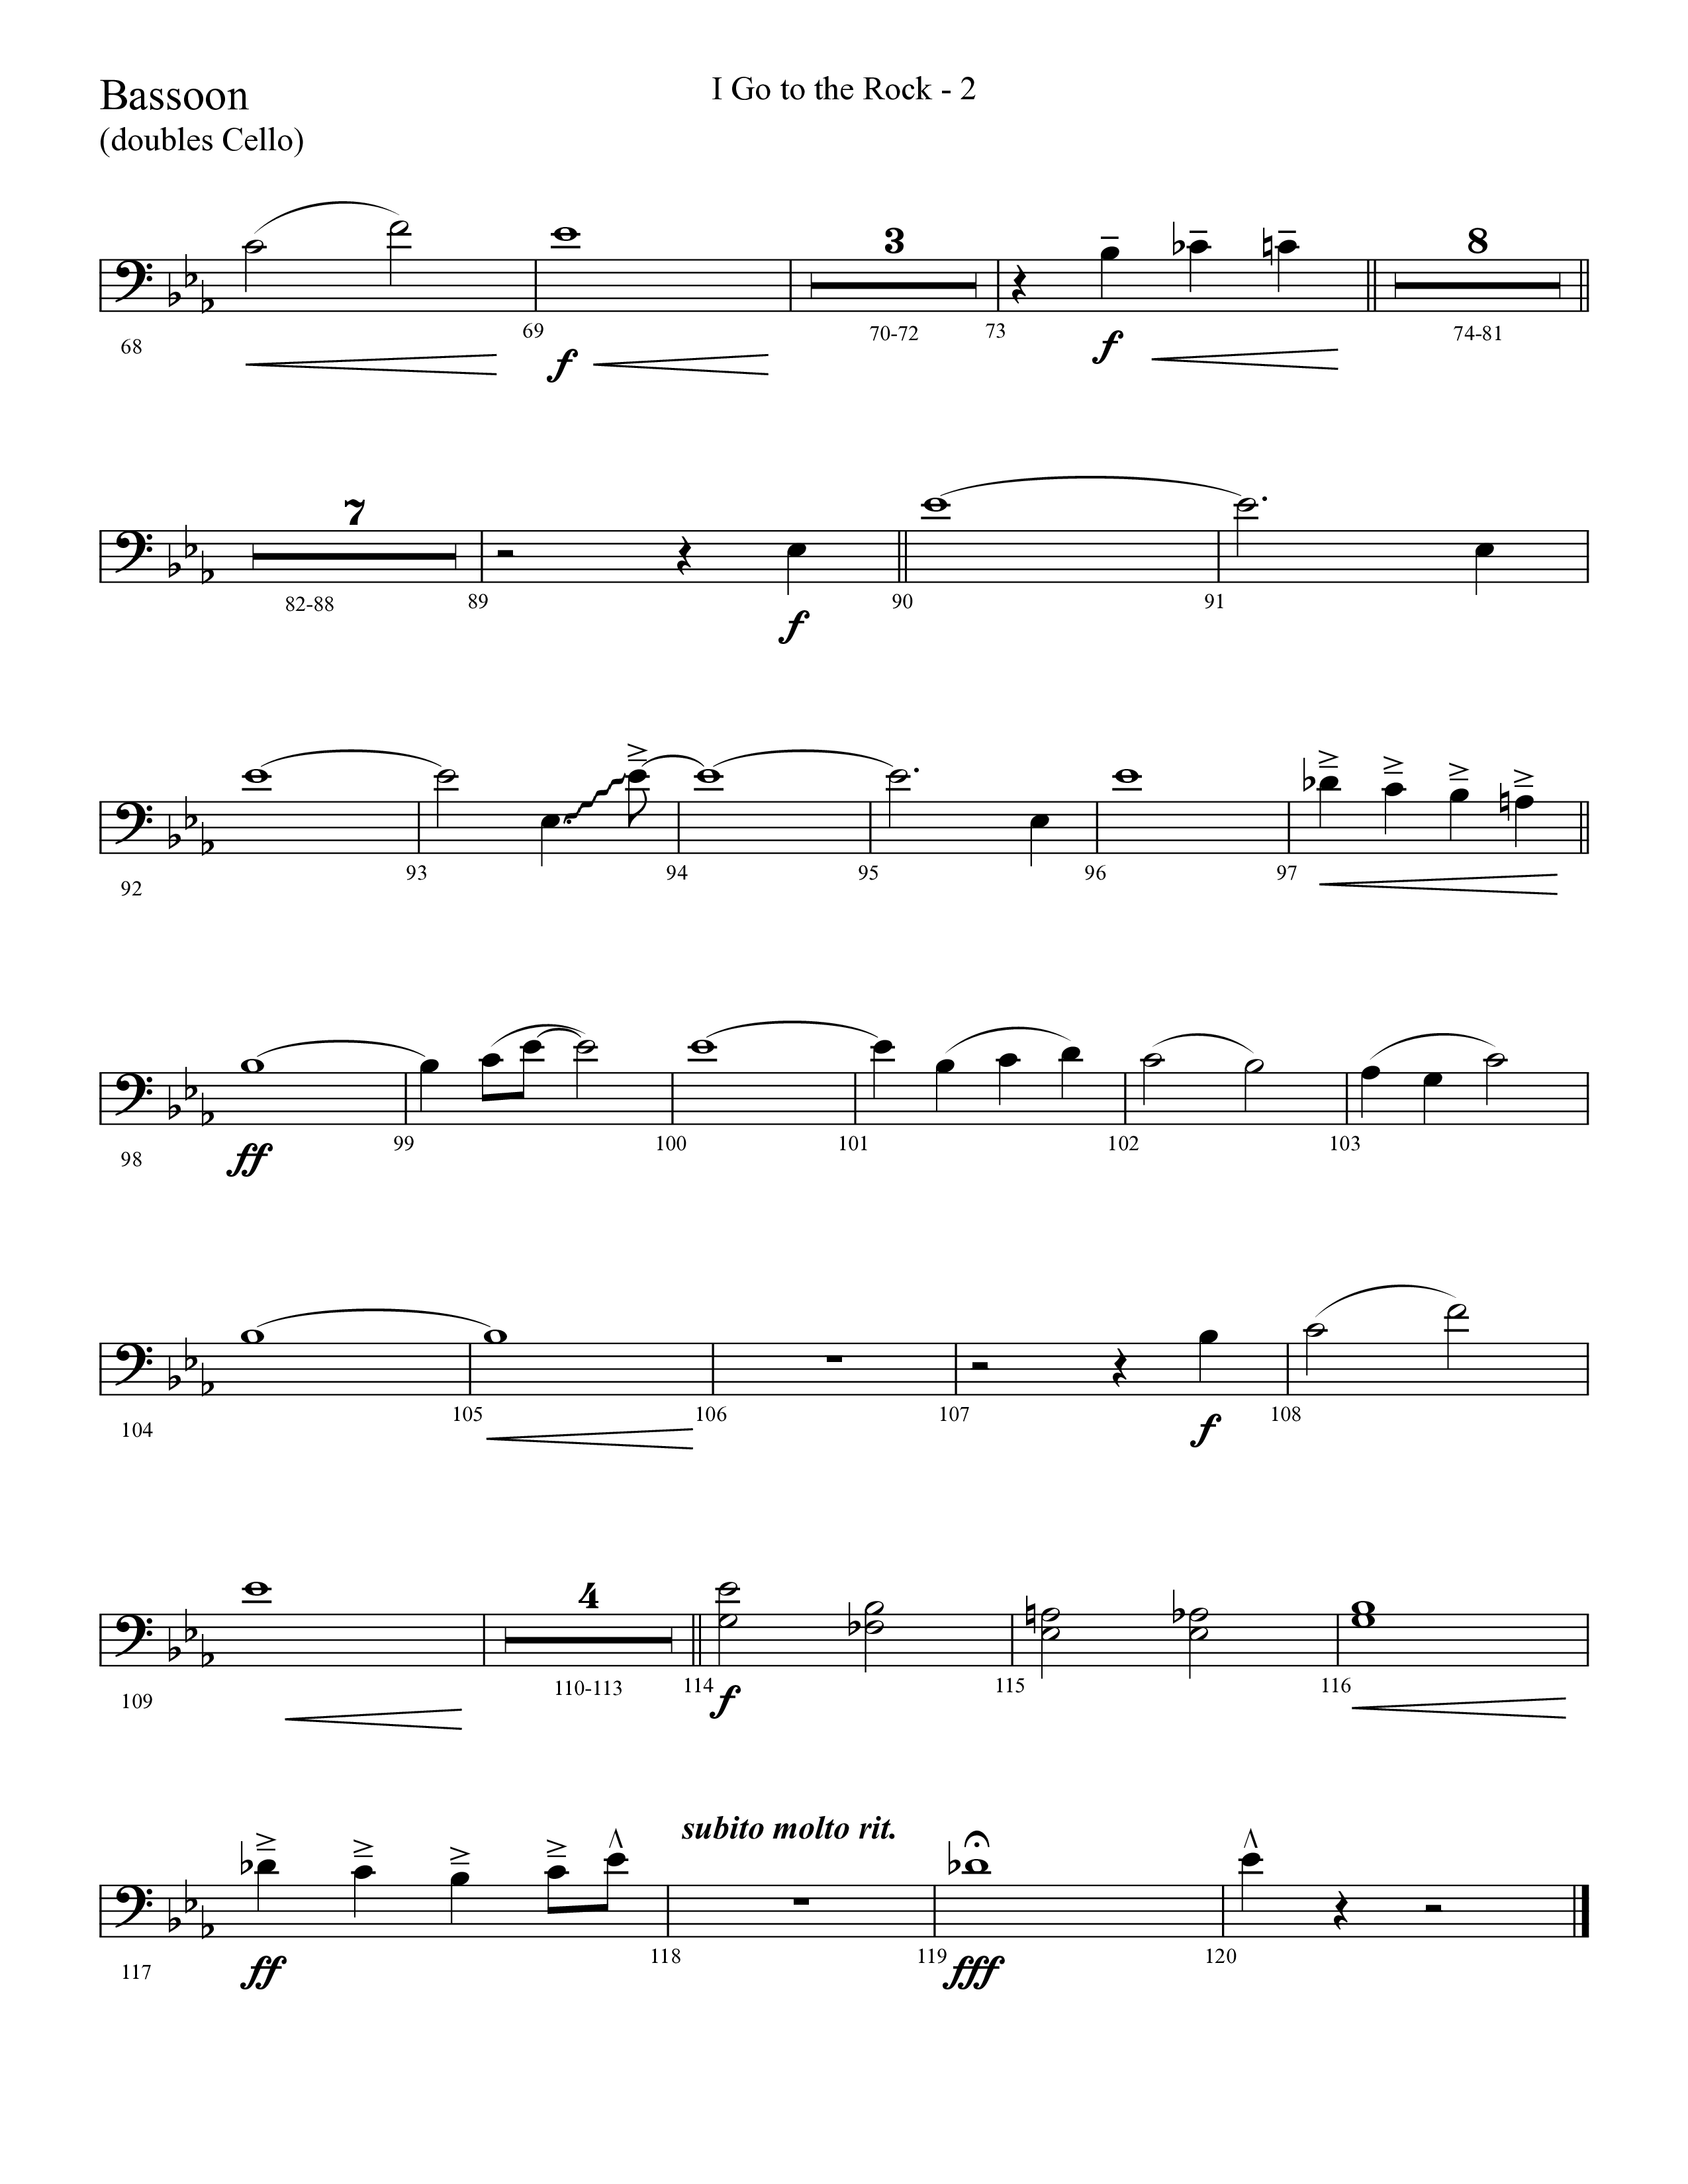 I Go To The Rock (Choral Anthem SATB) Bassoon (Lifeway Choral / Arr. Cliff Duren)